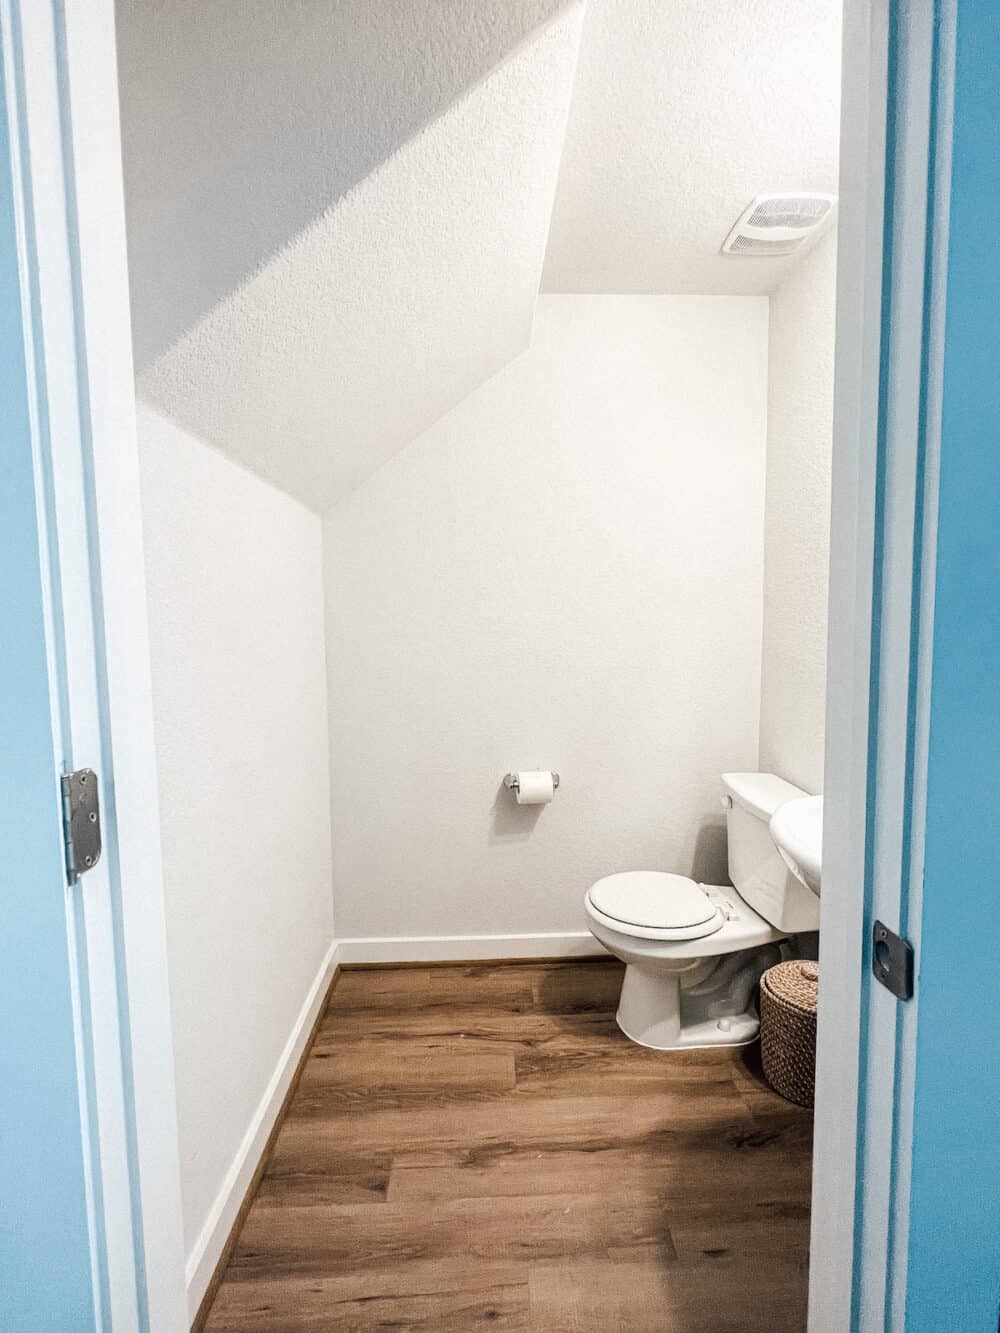 Bathroom with freshly caulked toilet